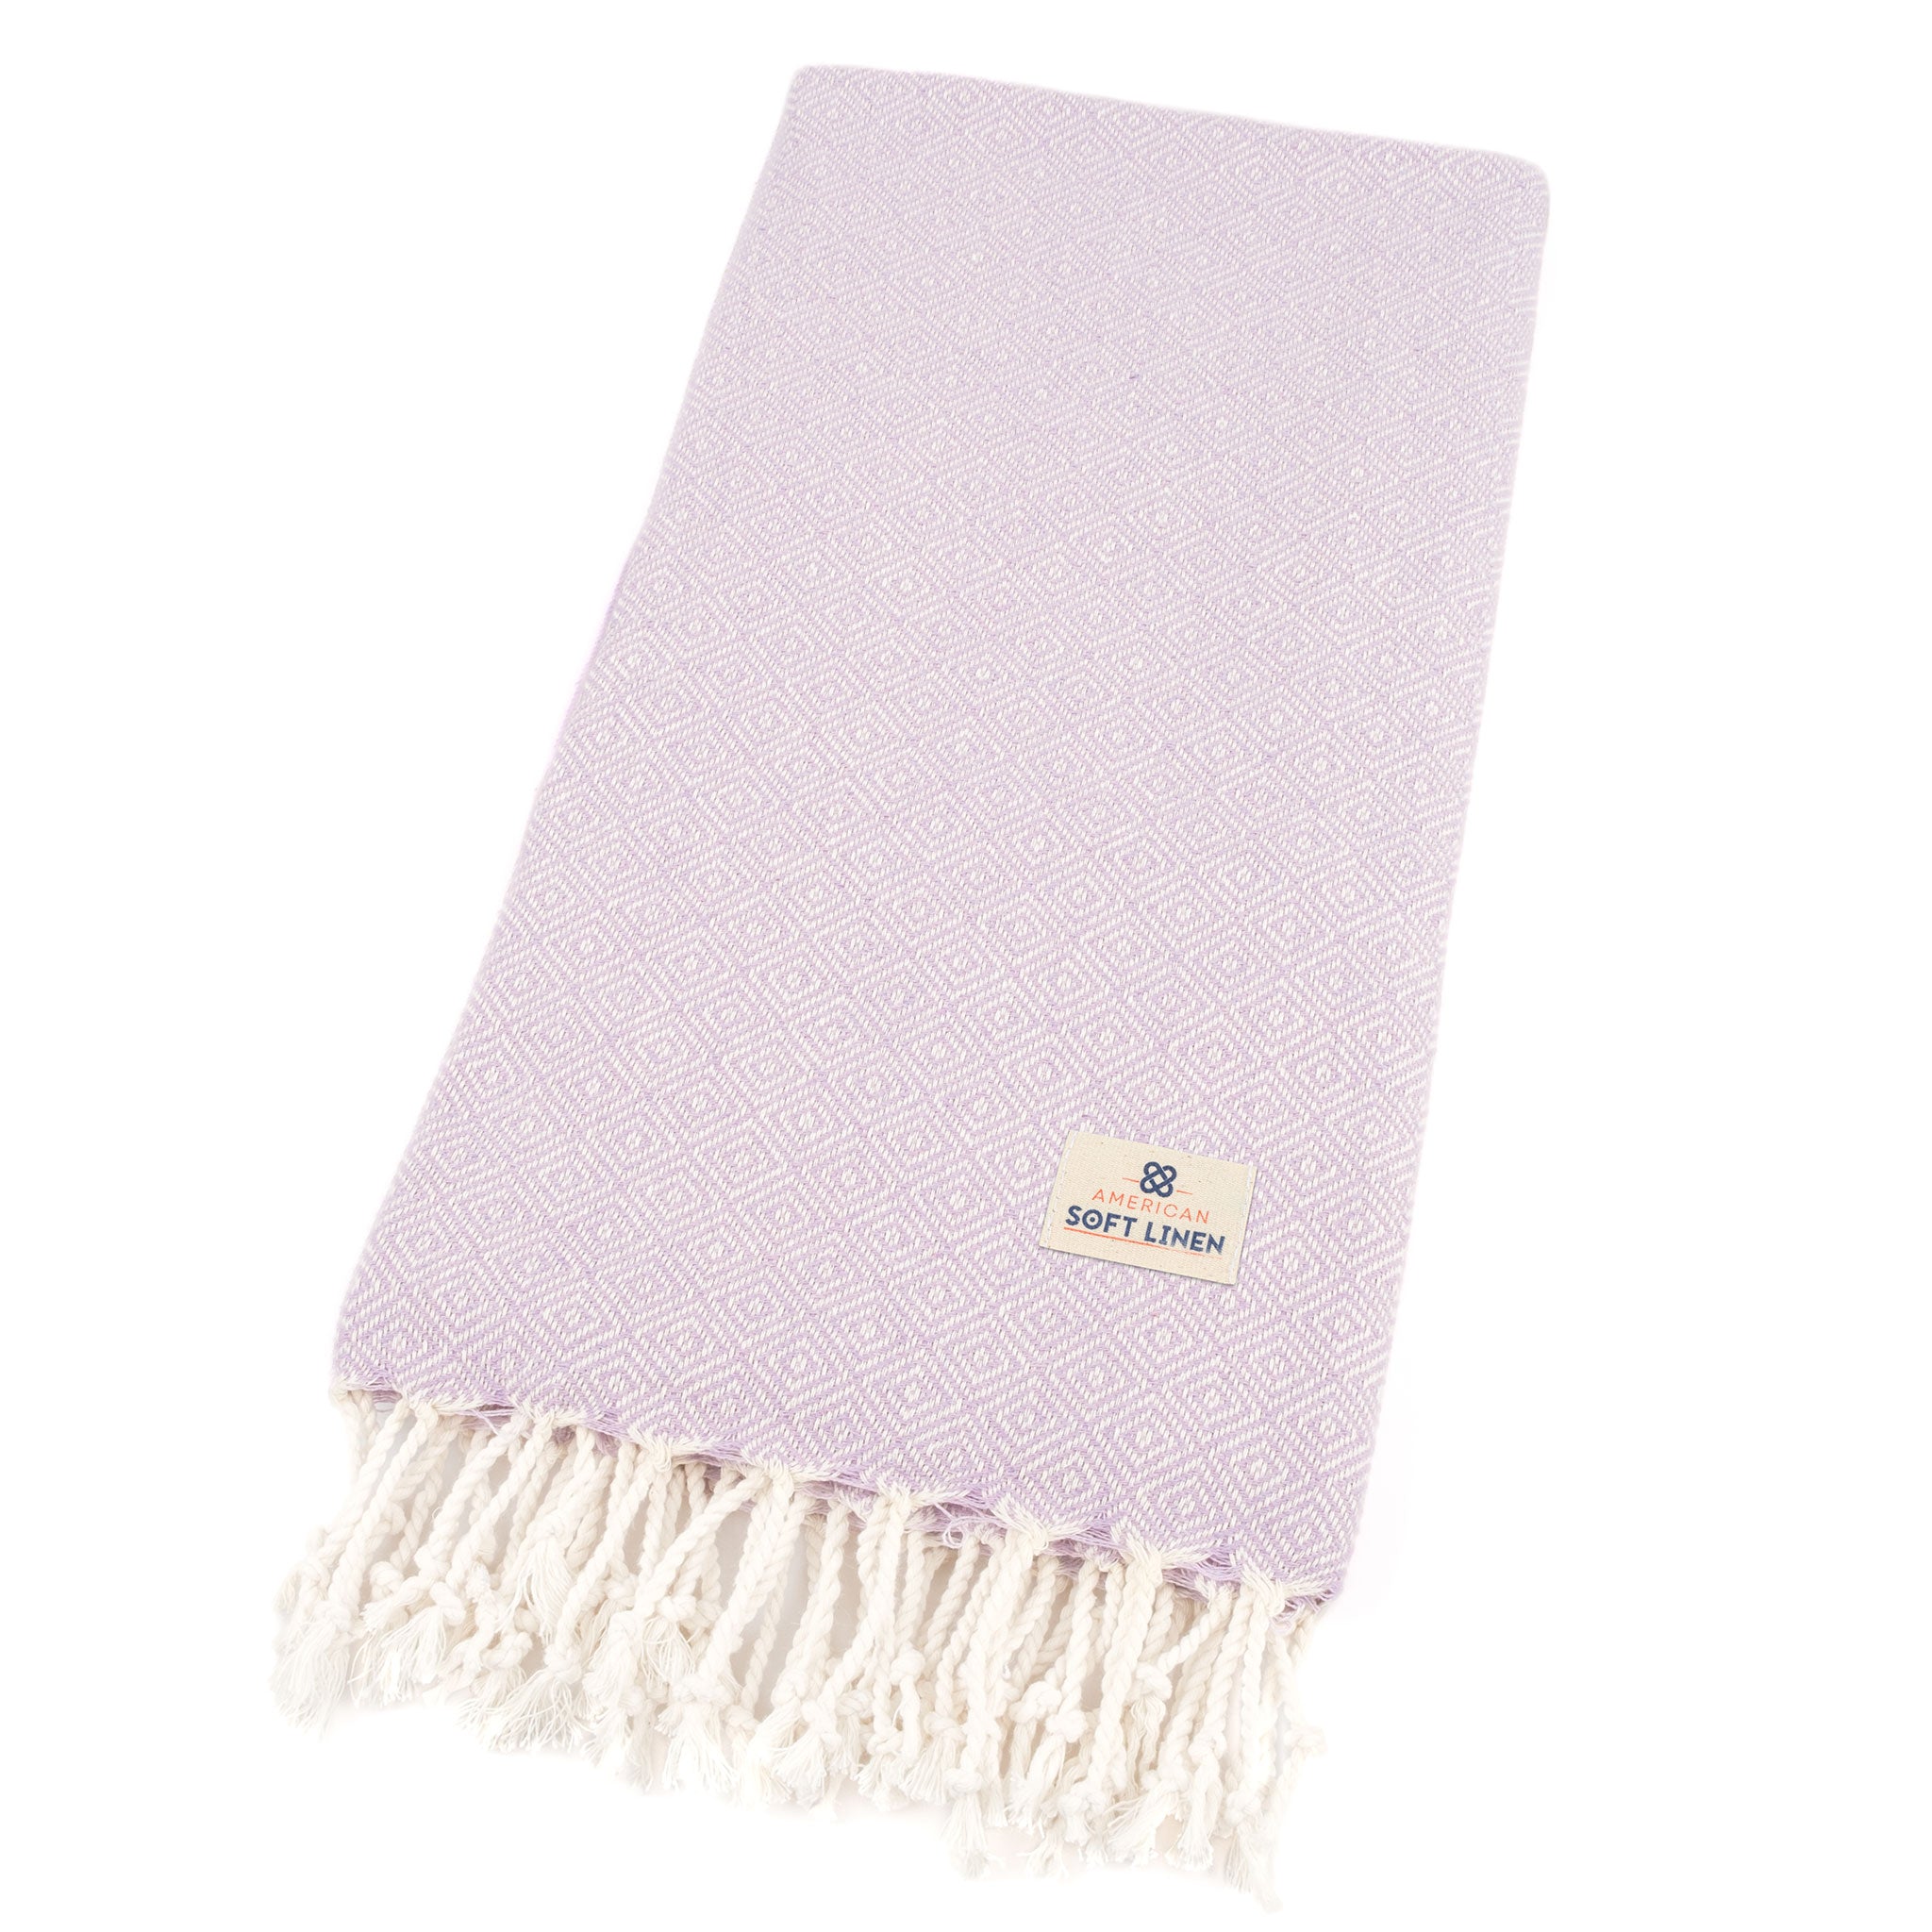 American Soft Linen - 100% Cotton Turkish Peshtemal Towels - 44 Set Case Pack - Lilac - 5